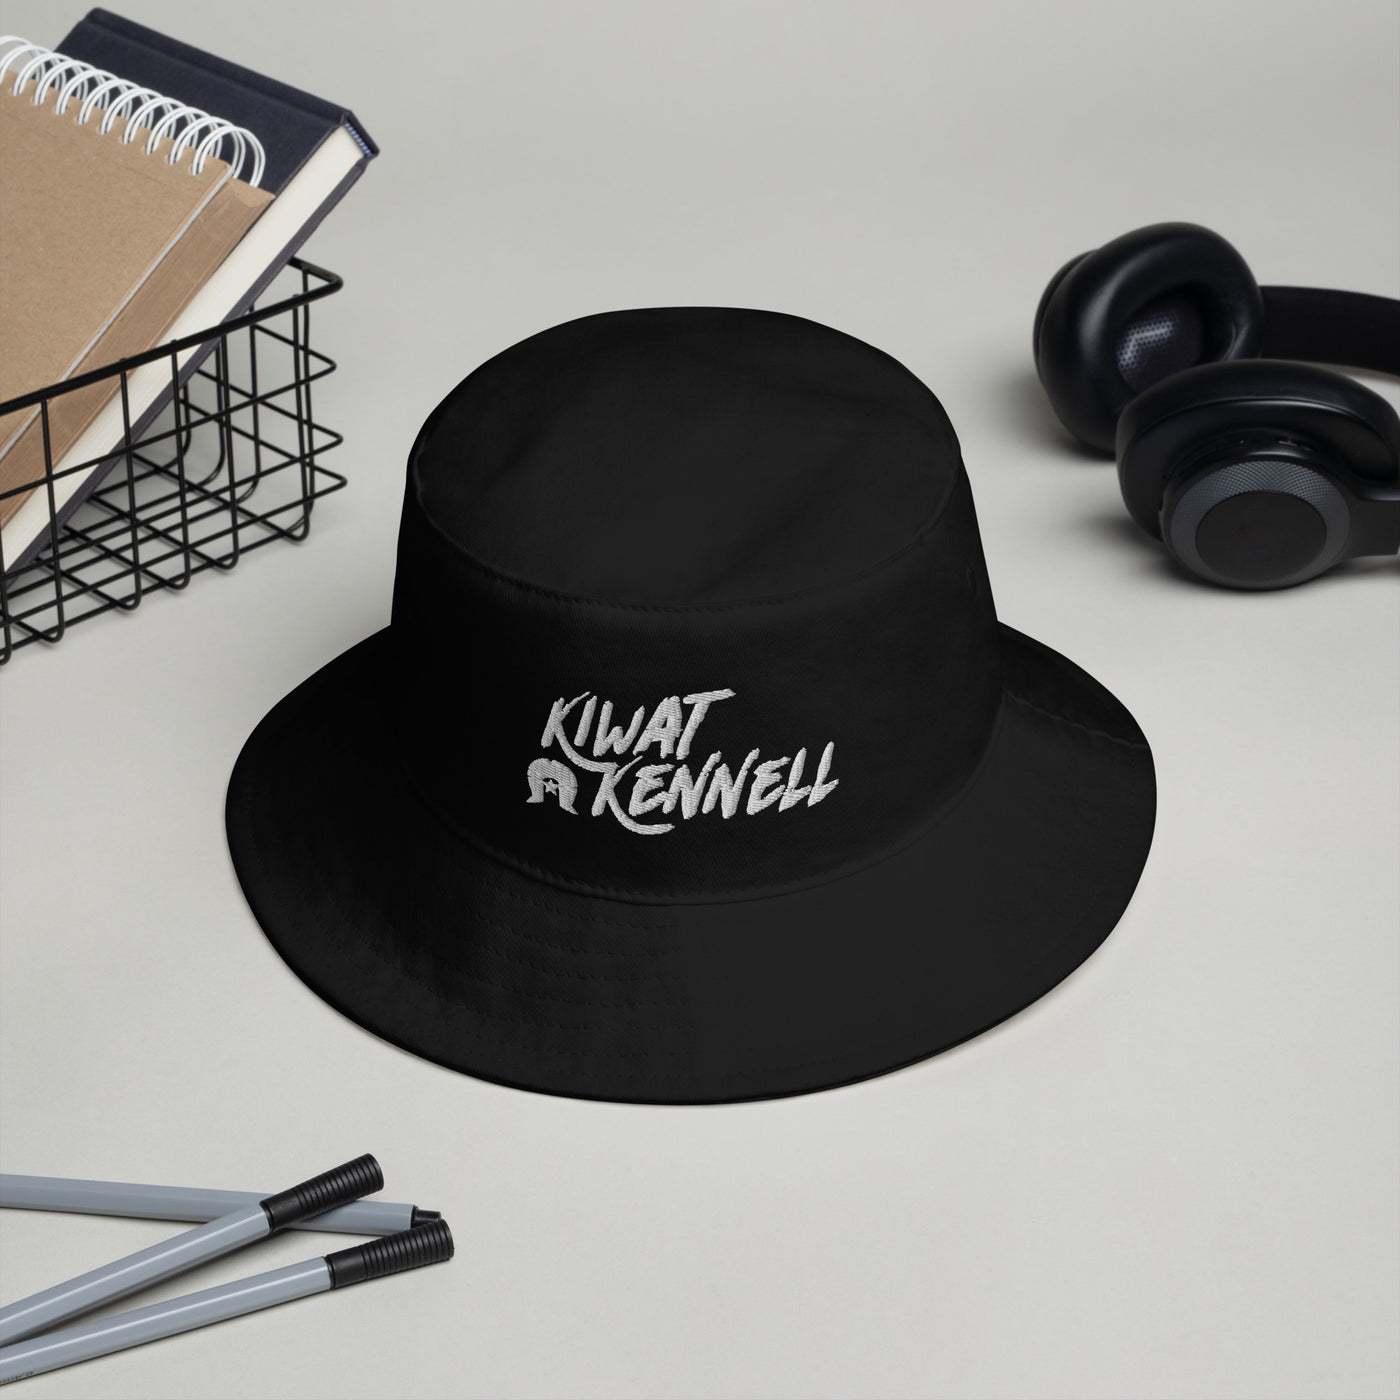 Official Kiwat Kennell - Bucket Hats